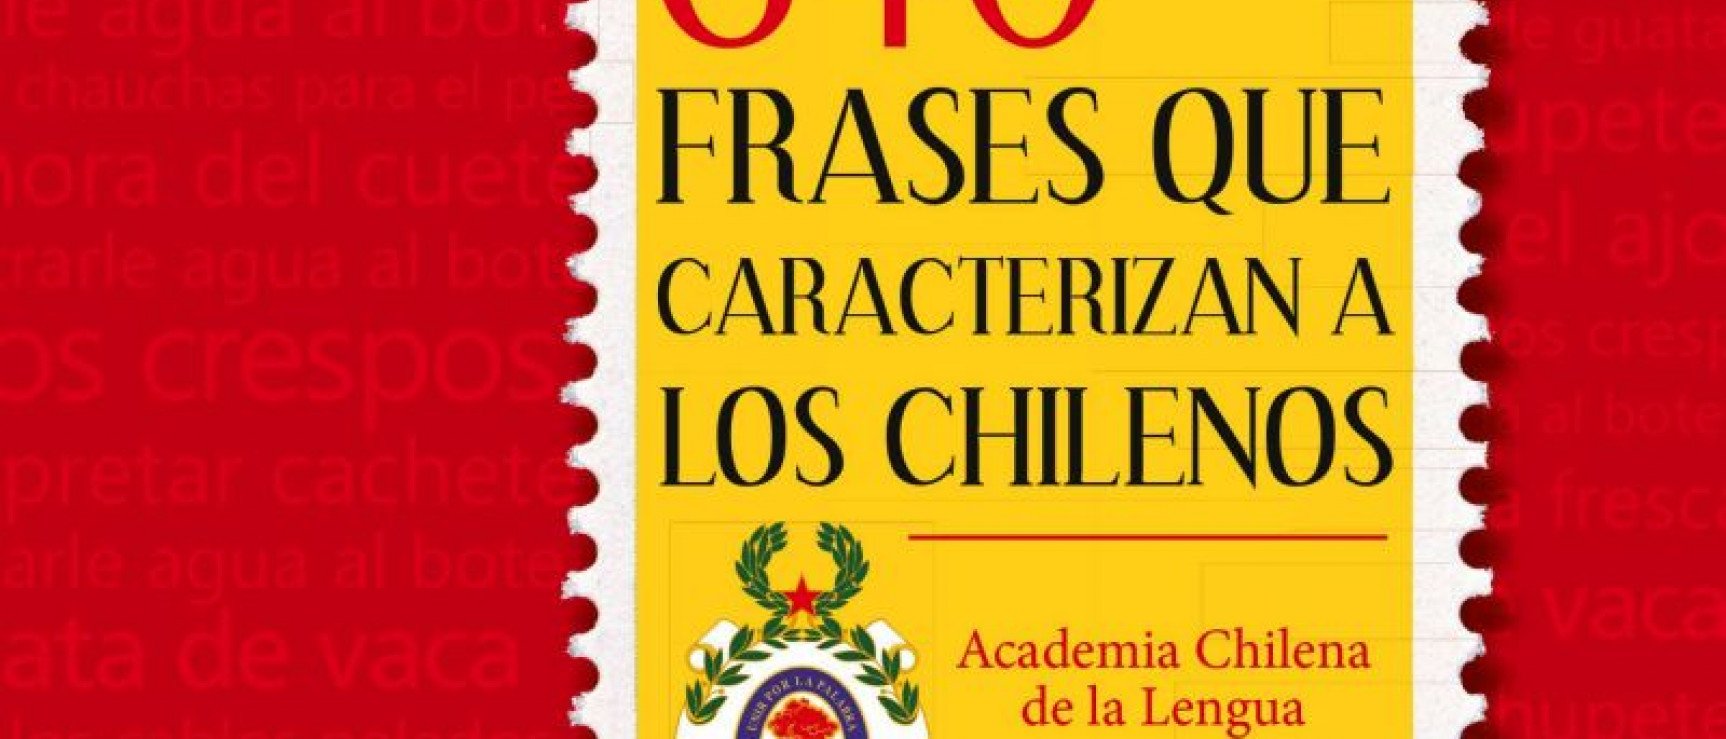 640 frases que caracterizan a los chilenos | Noticia | Asociación de  Academias de la Lengua Española